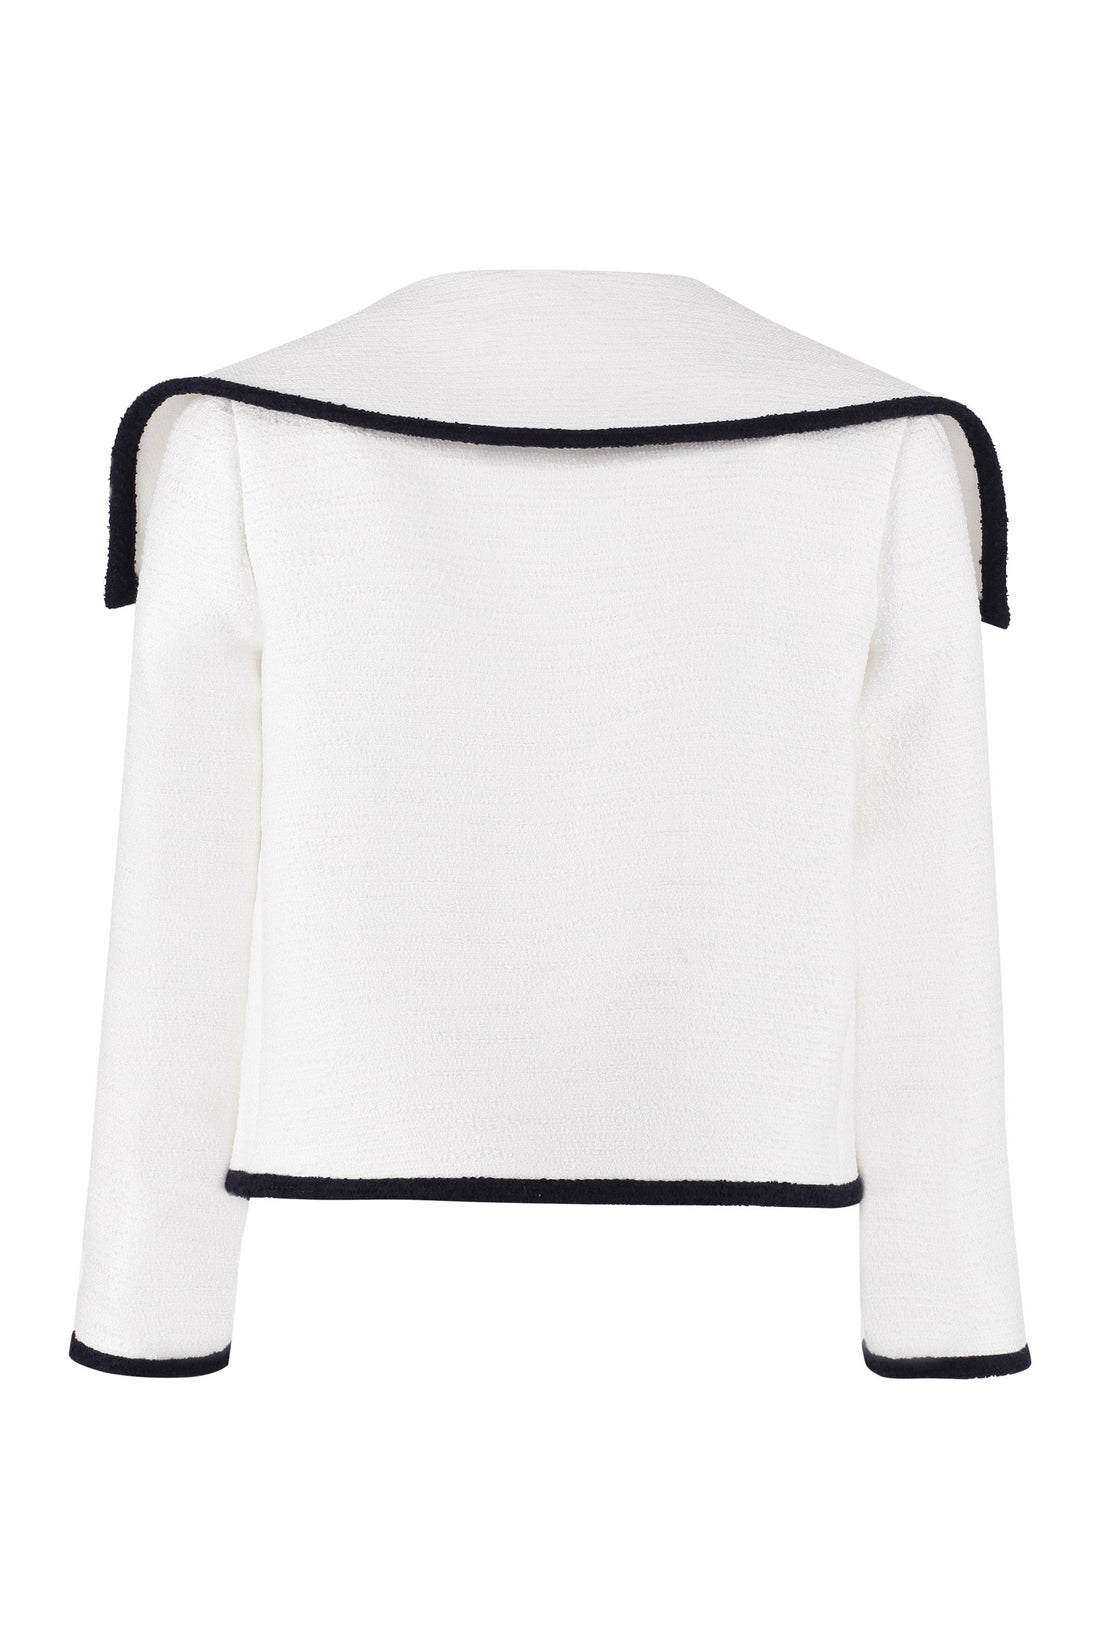 Valentino-OUTLET-SALE-Tweed jacket-ARCHIVIST